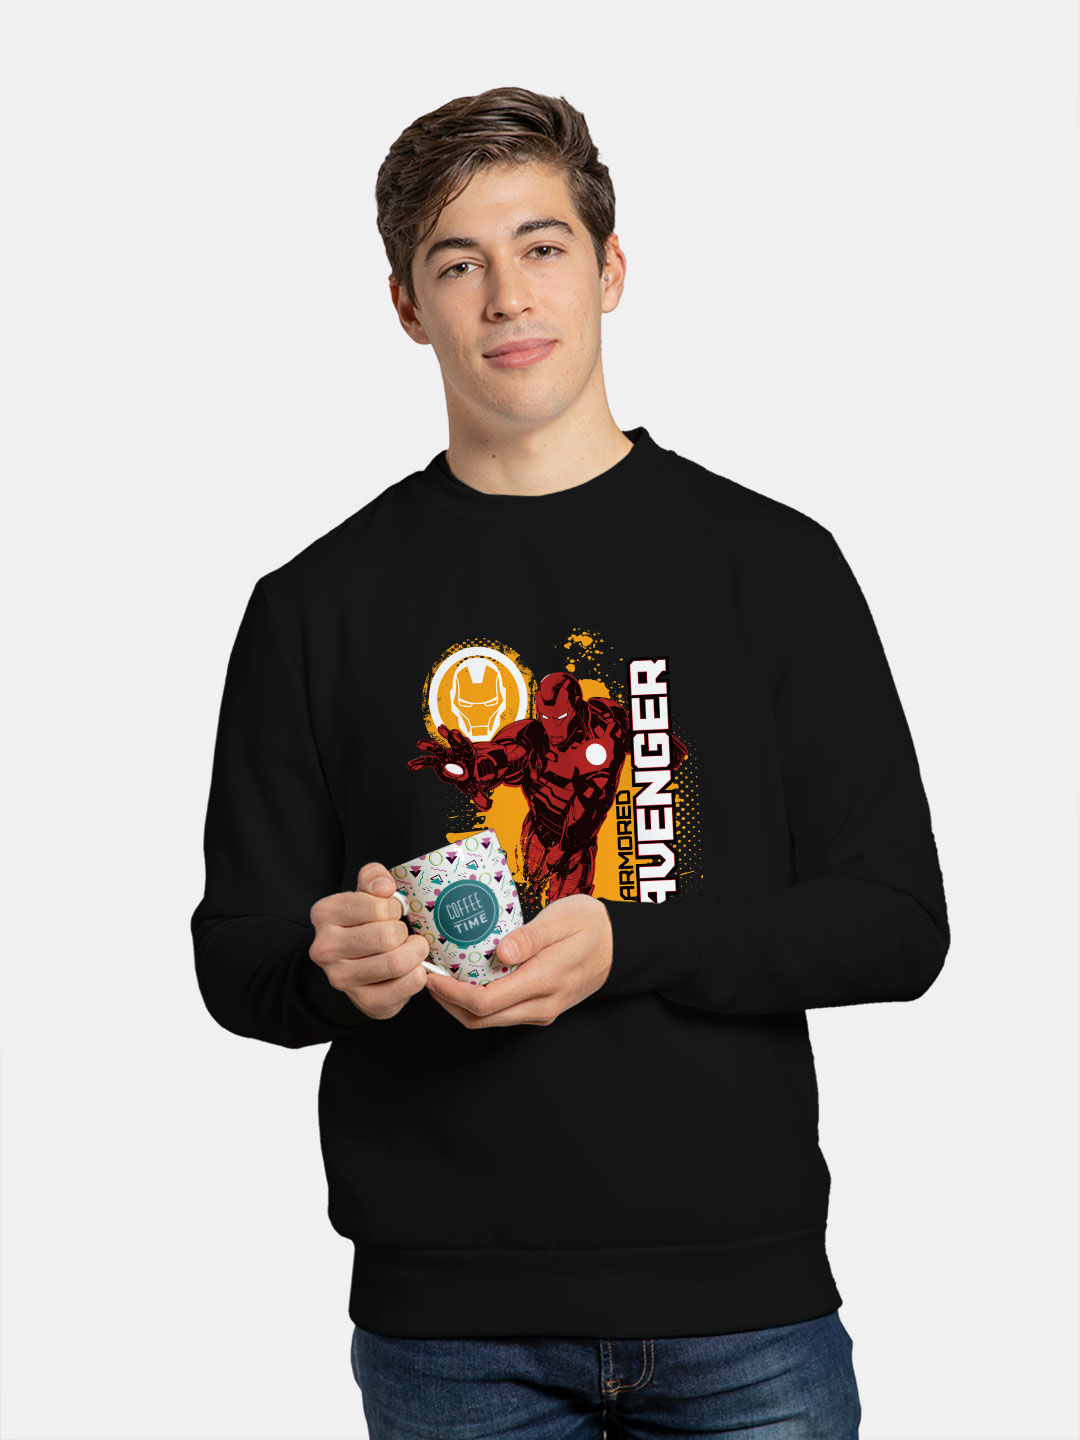 Buy Armored Avenger - Male Designer Sweatshirt Sweatshirts Online